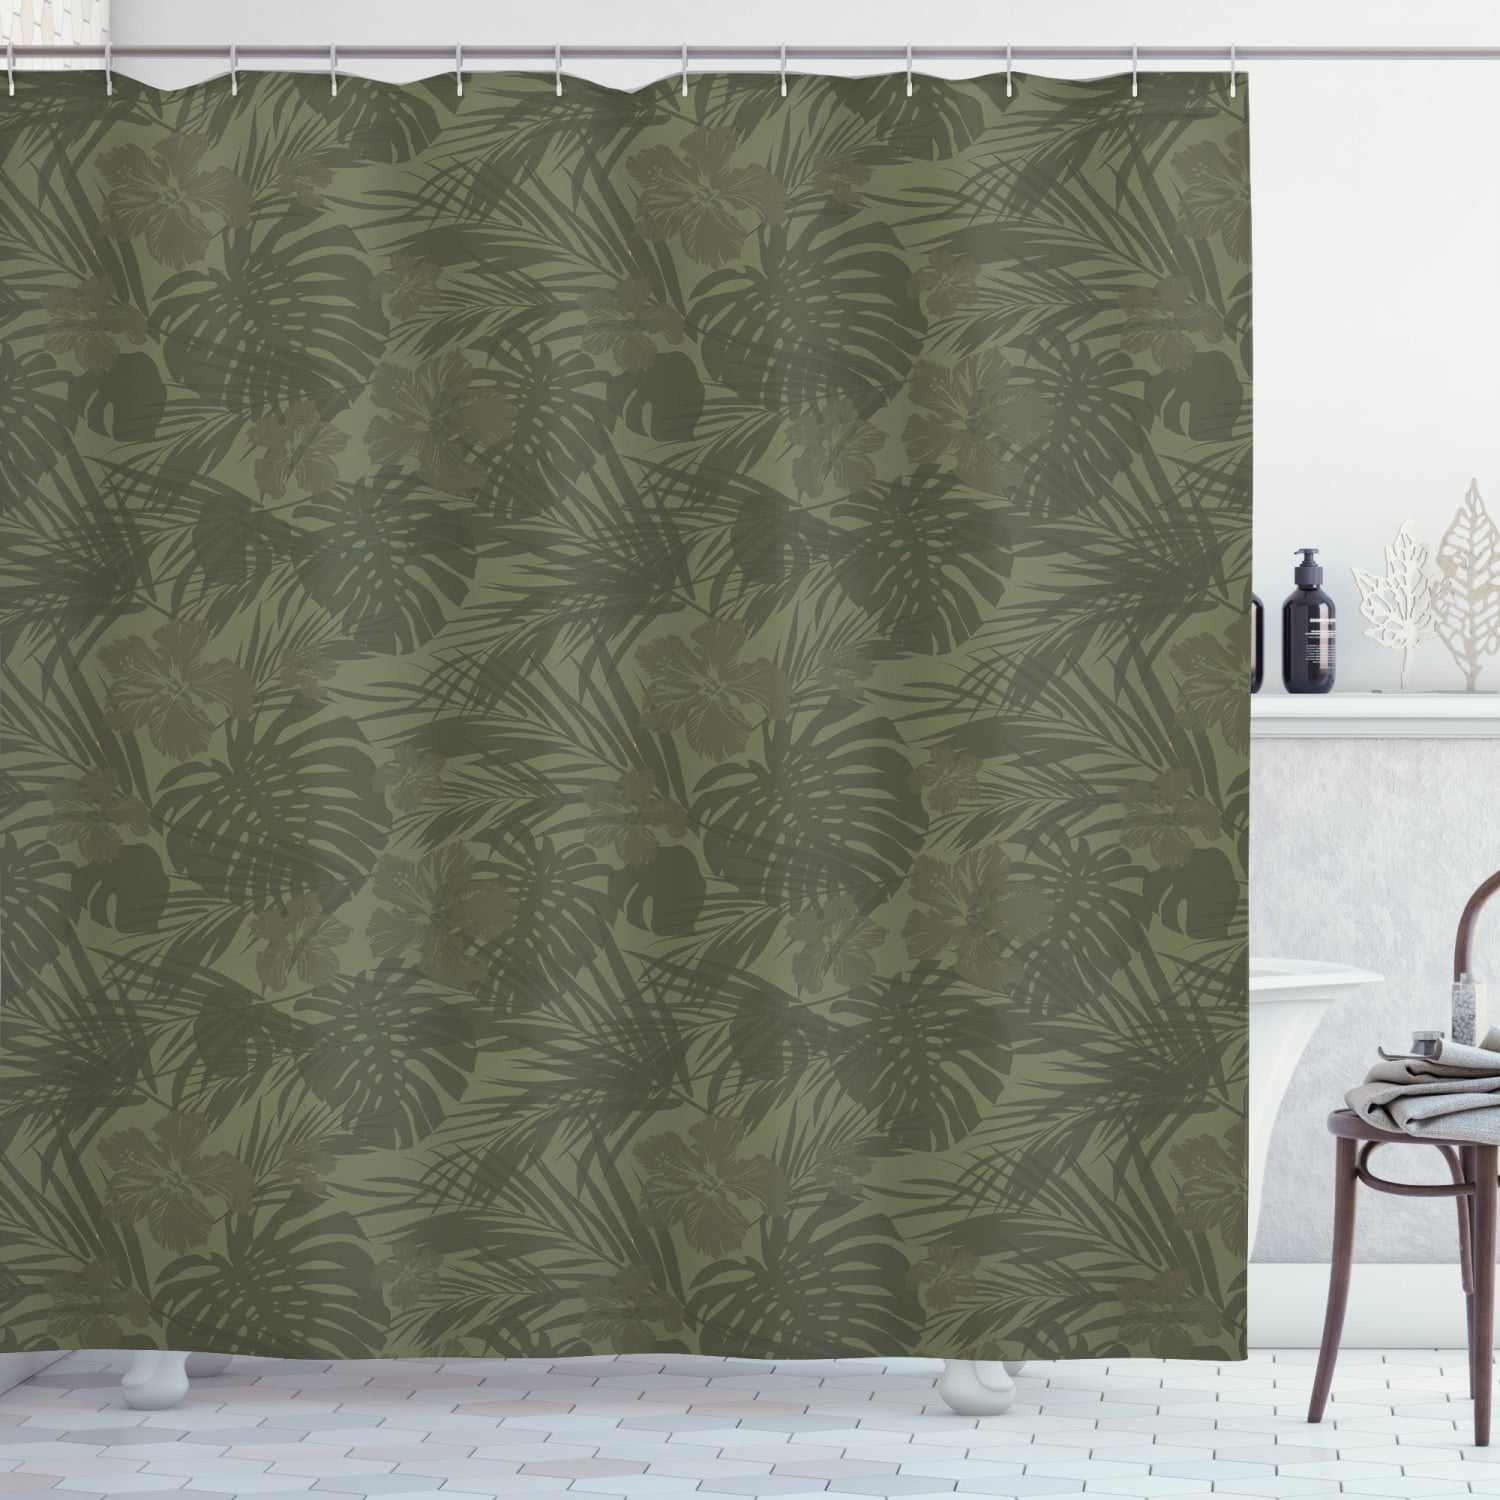 Monkey Tropical Fabric Shower Curtain Set Bathroom Accessories Waterproof 71X71" 